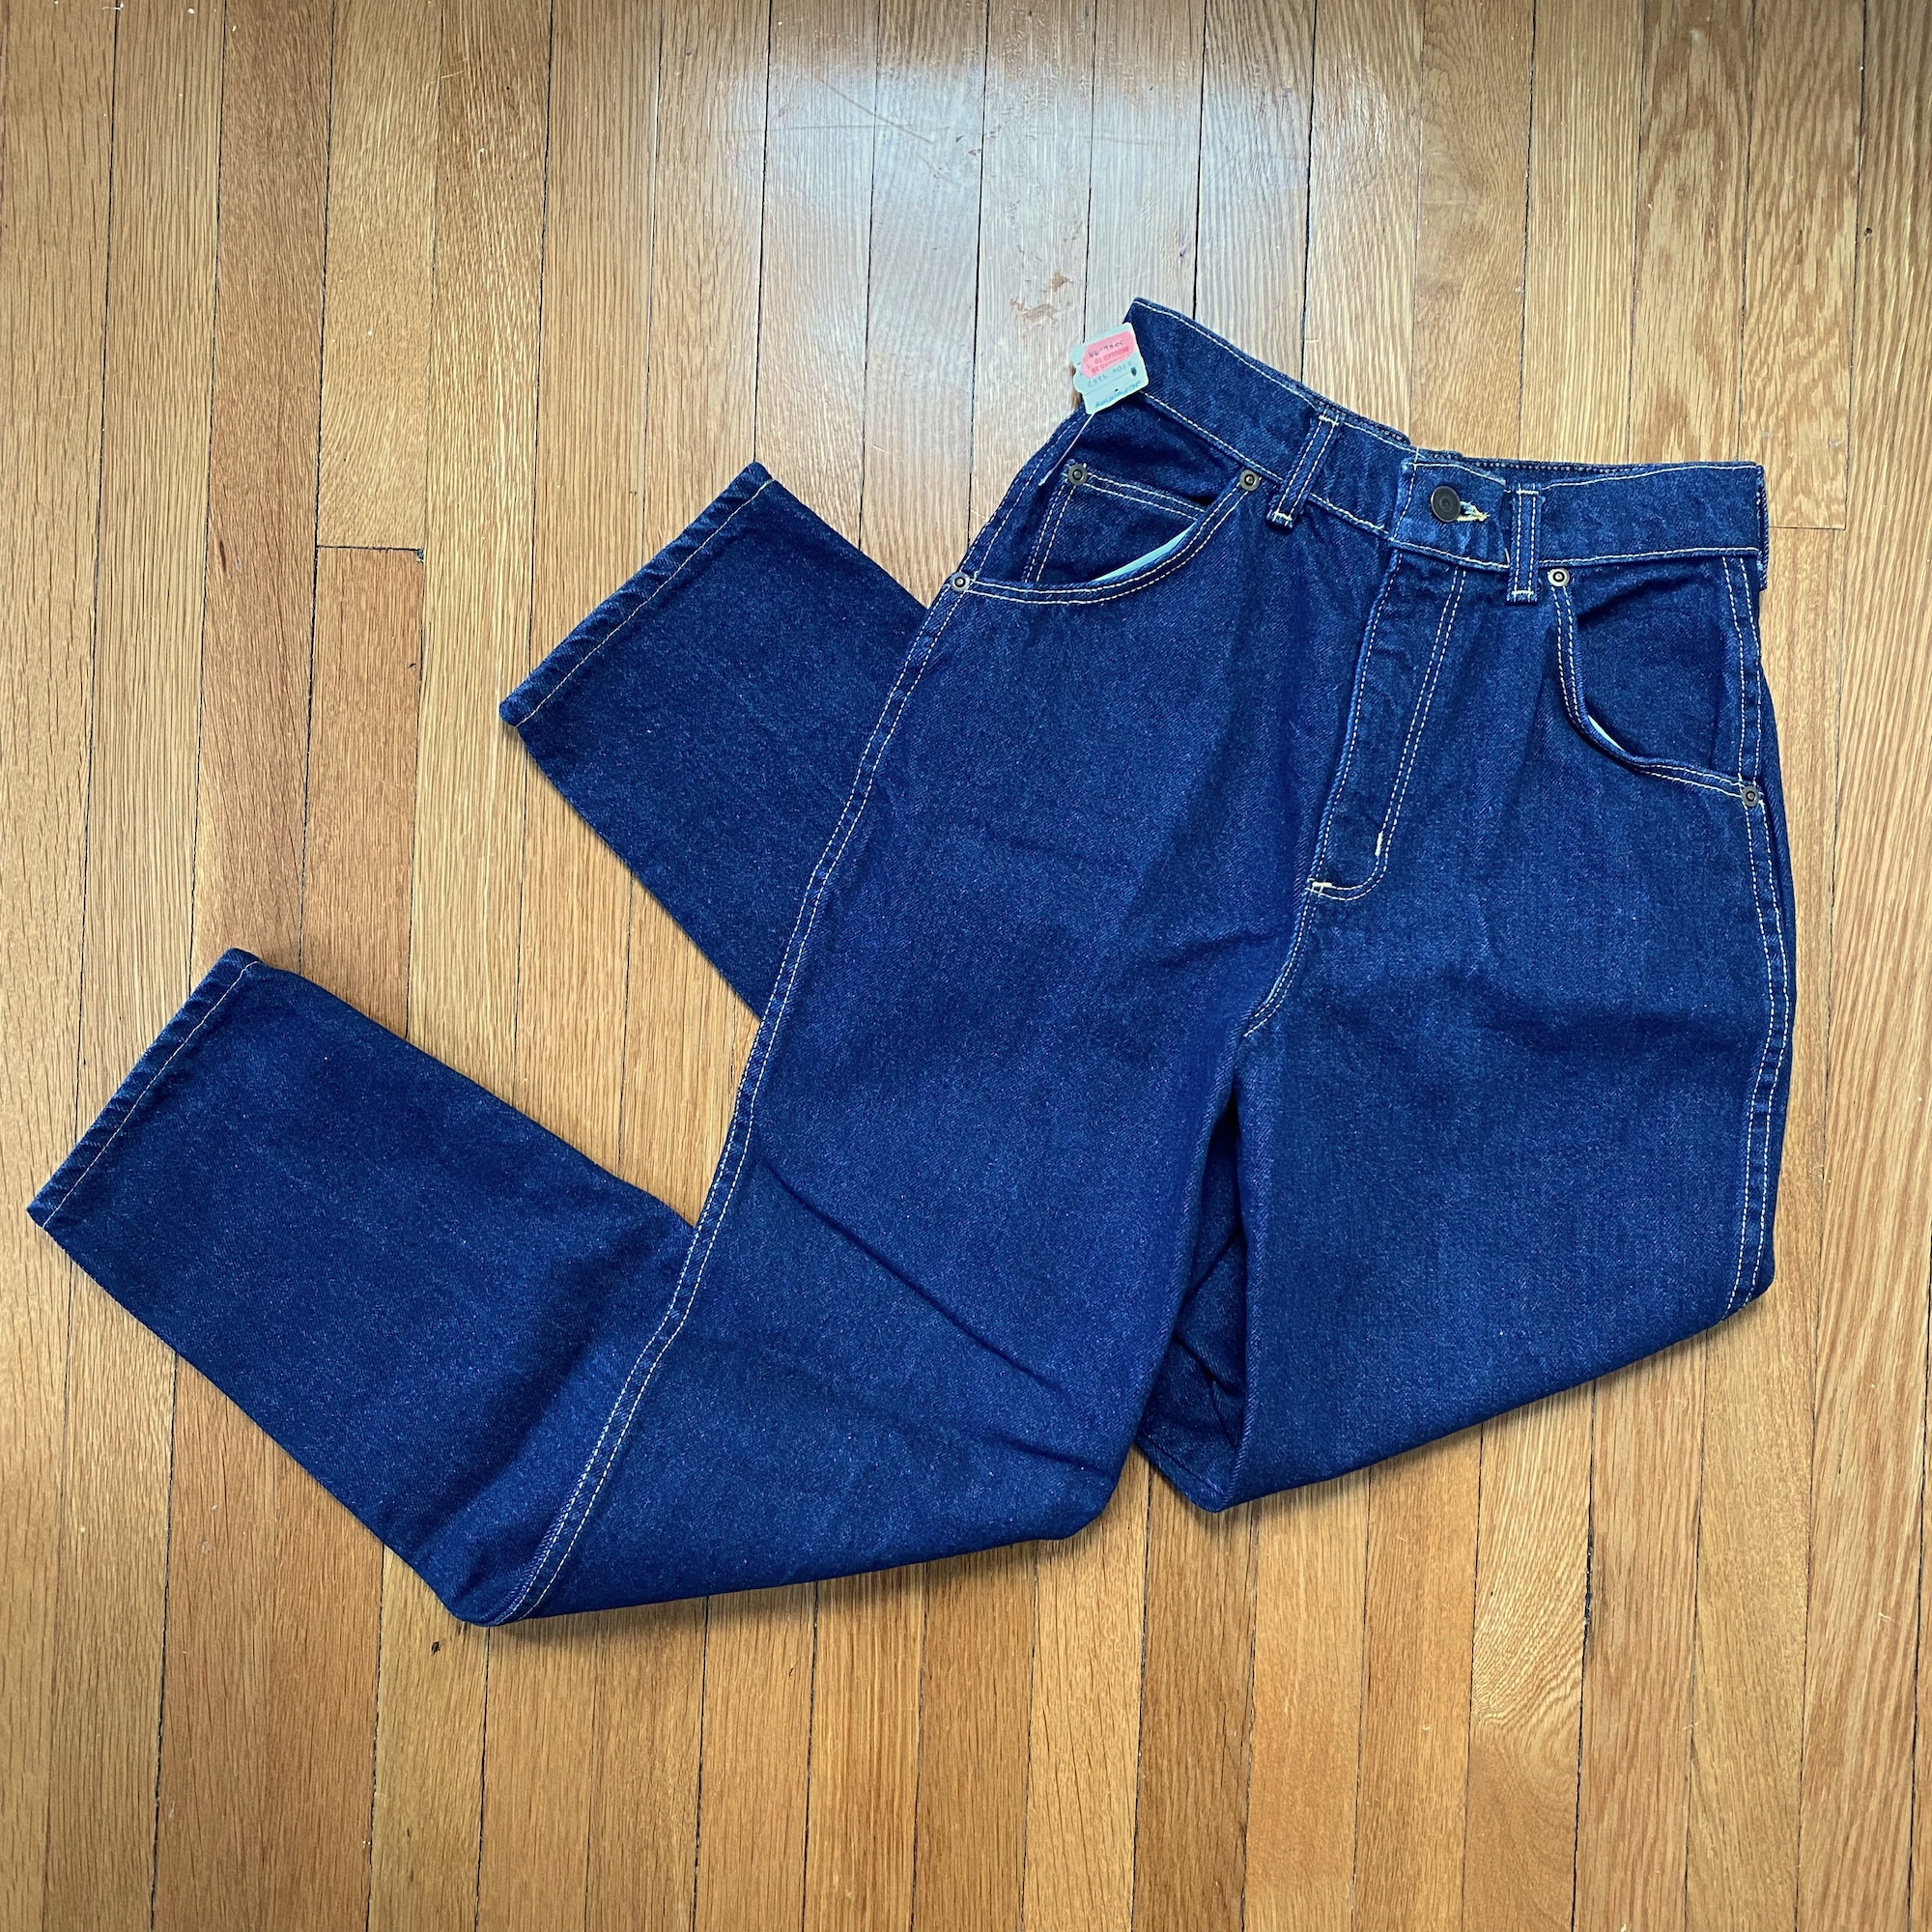 vintage 80s deadstock dark wash mom jeans / 26 waist